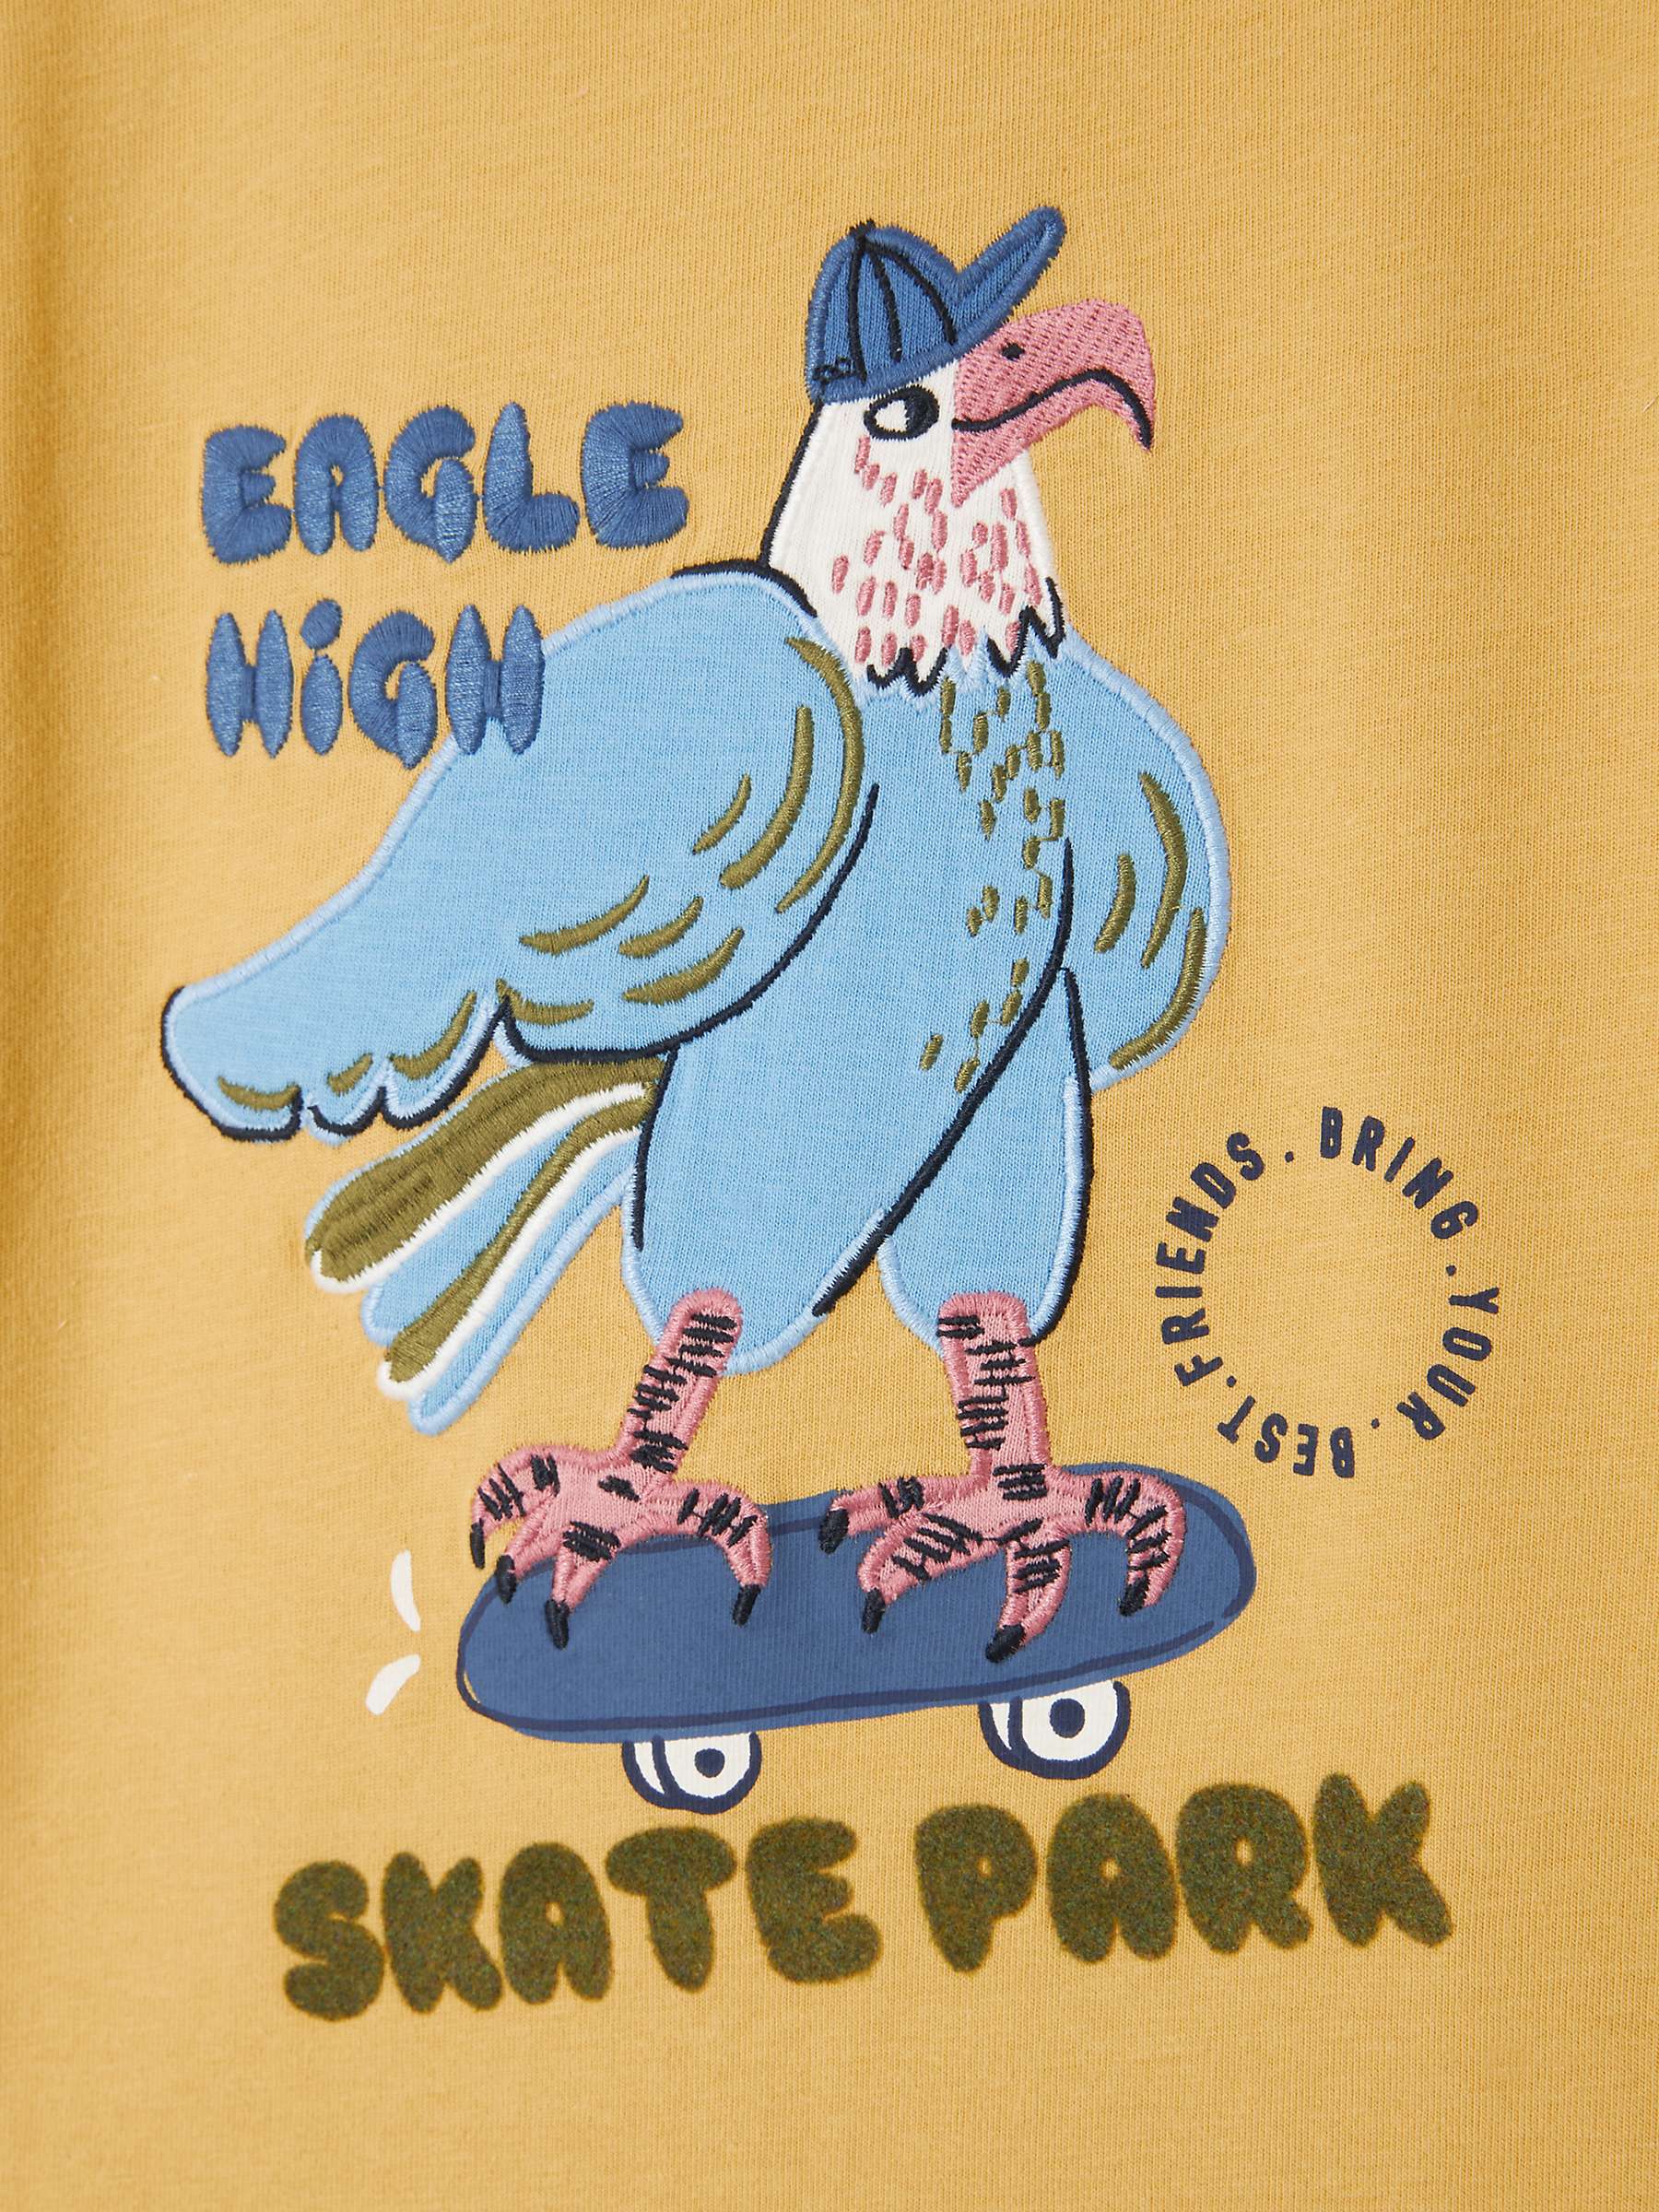 Buy John Lewis Kids' Eagle Skate Park T-Shirt, Yellow Online at johnlewis.com